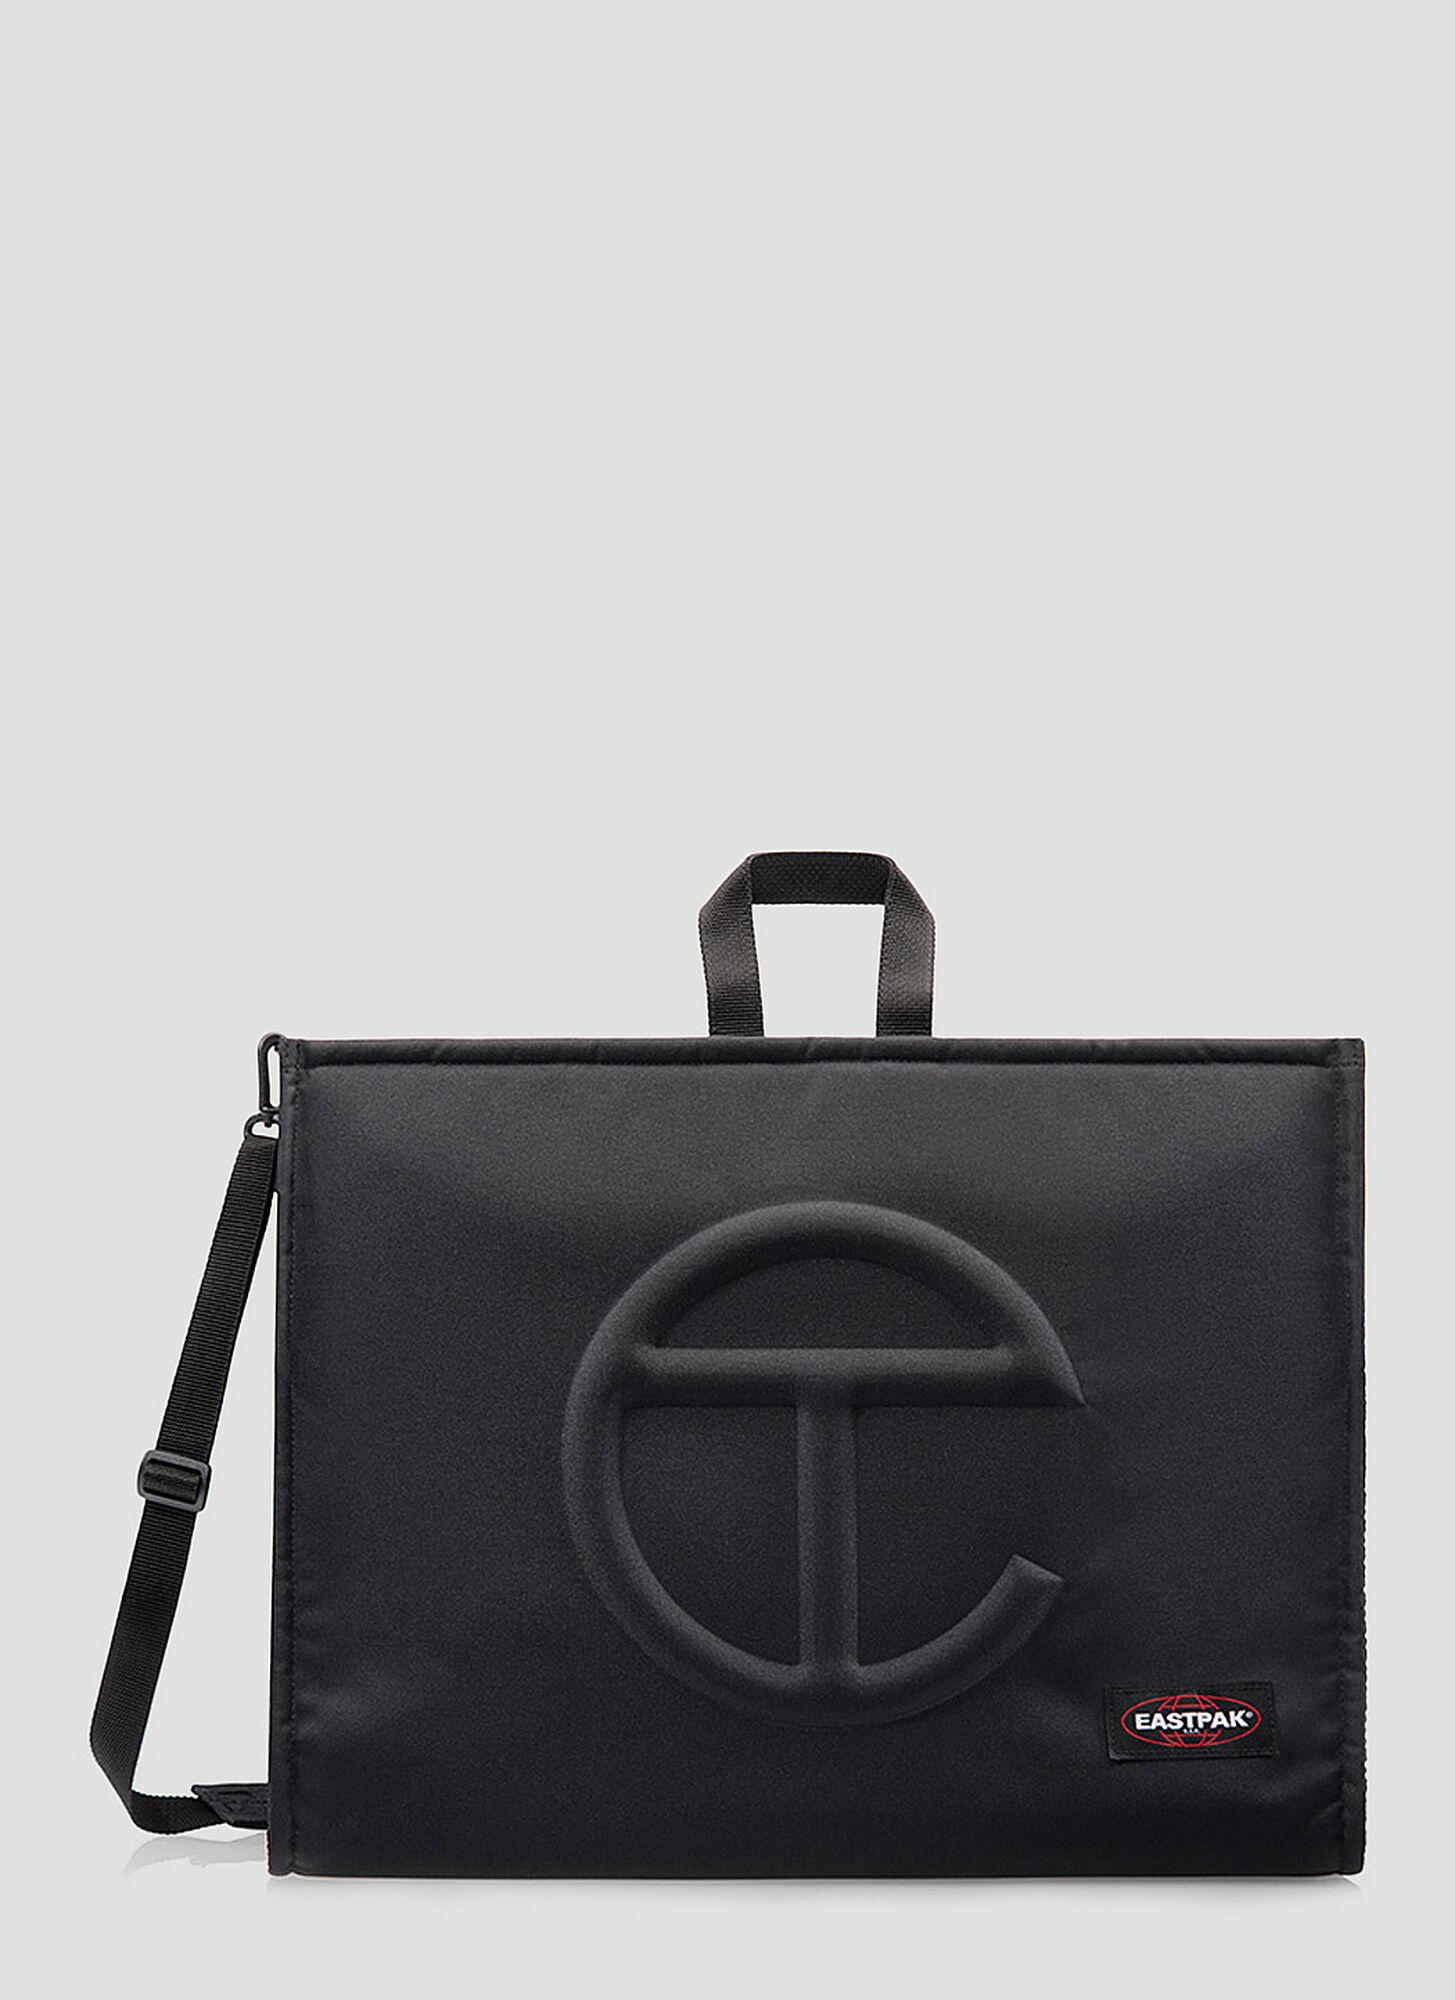 Eastpak X Telfar Shopper Convertible Large Tote Bag Unisex Black